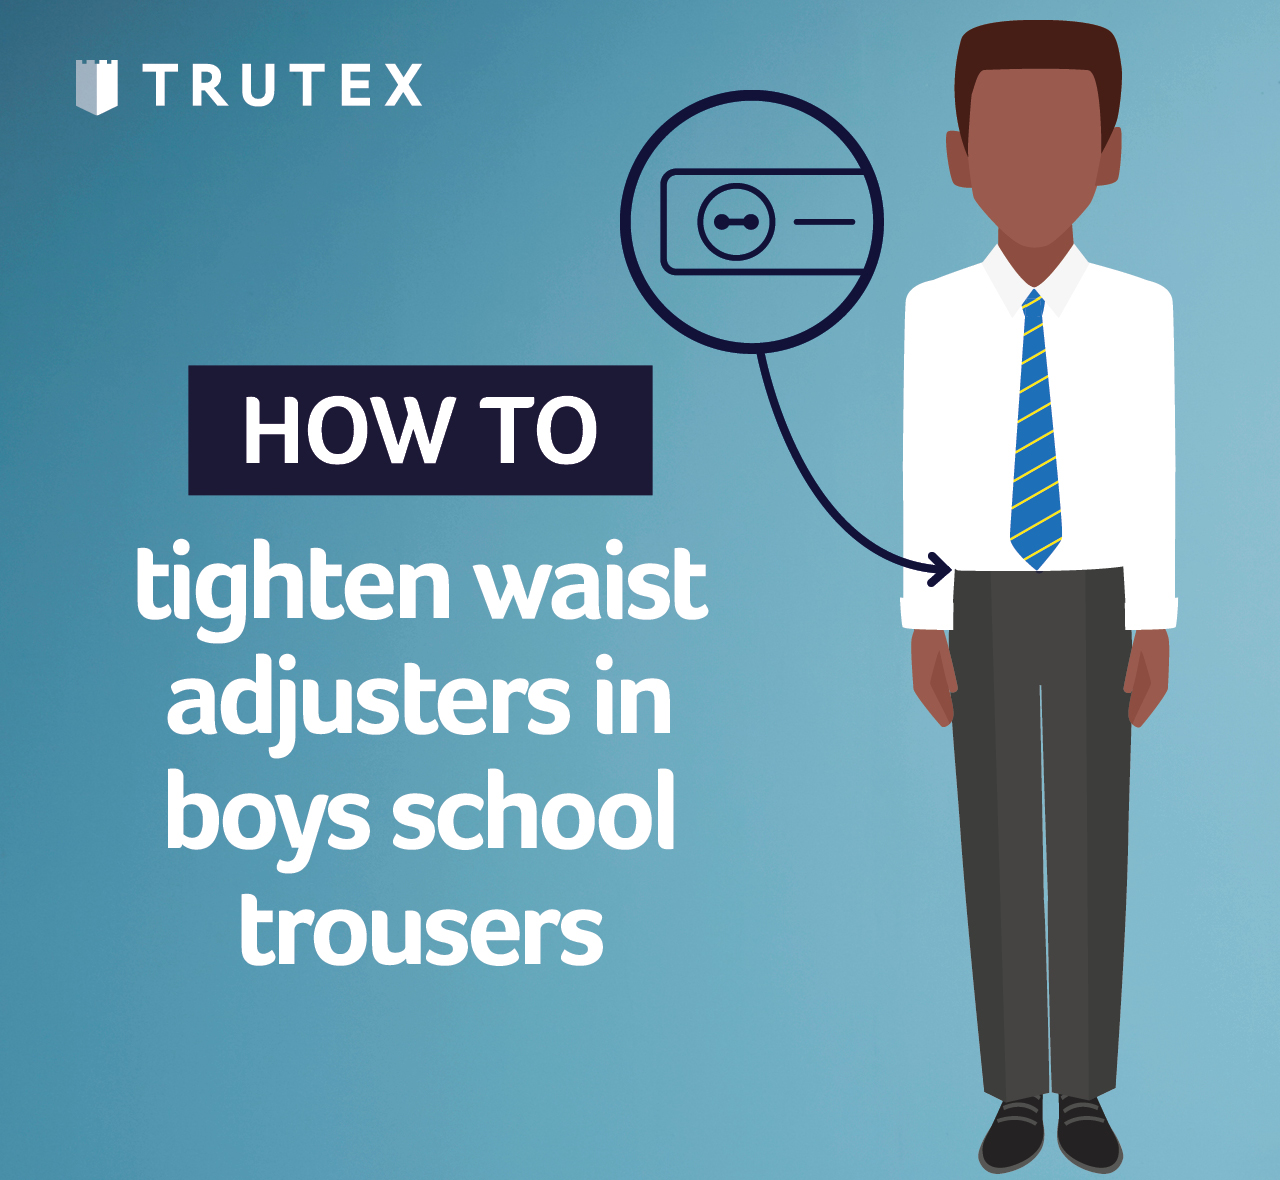 How to: tighten waist adjusters in boys school trousers